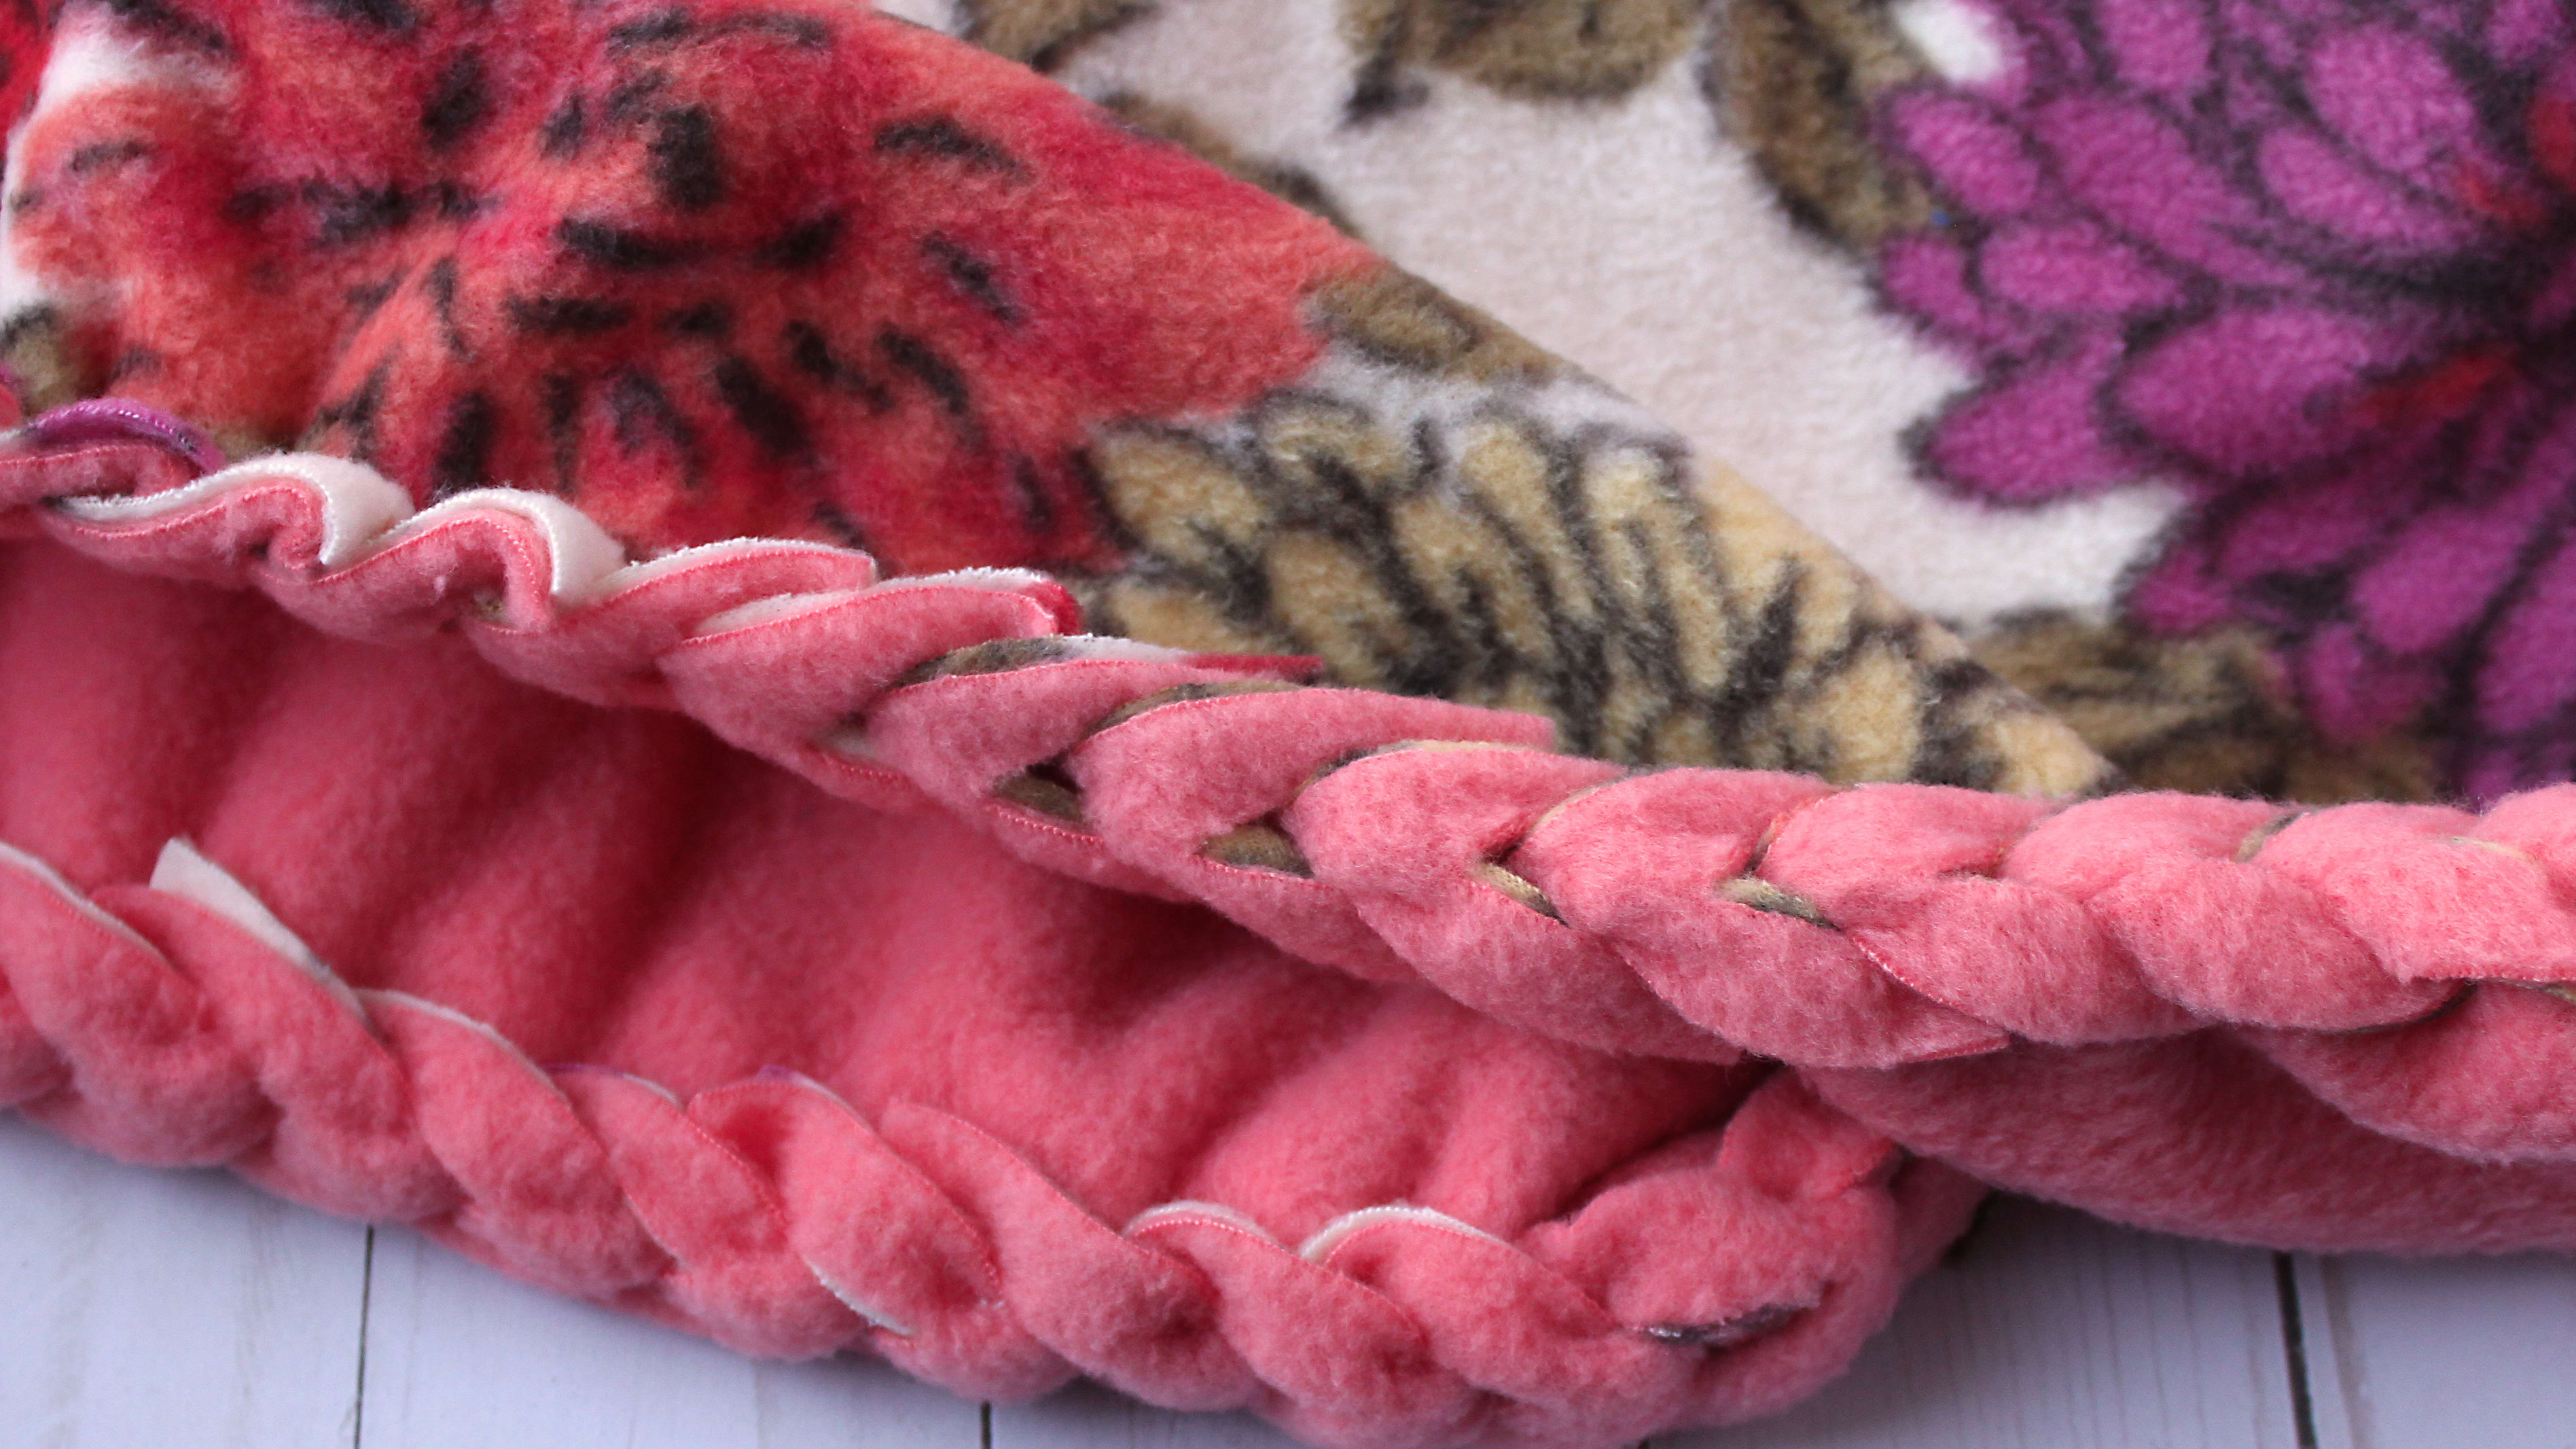 How to Make a No Sew Fleece Blanket